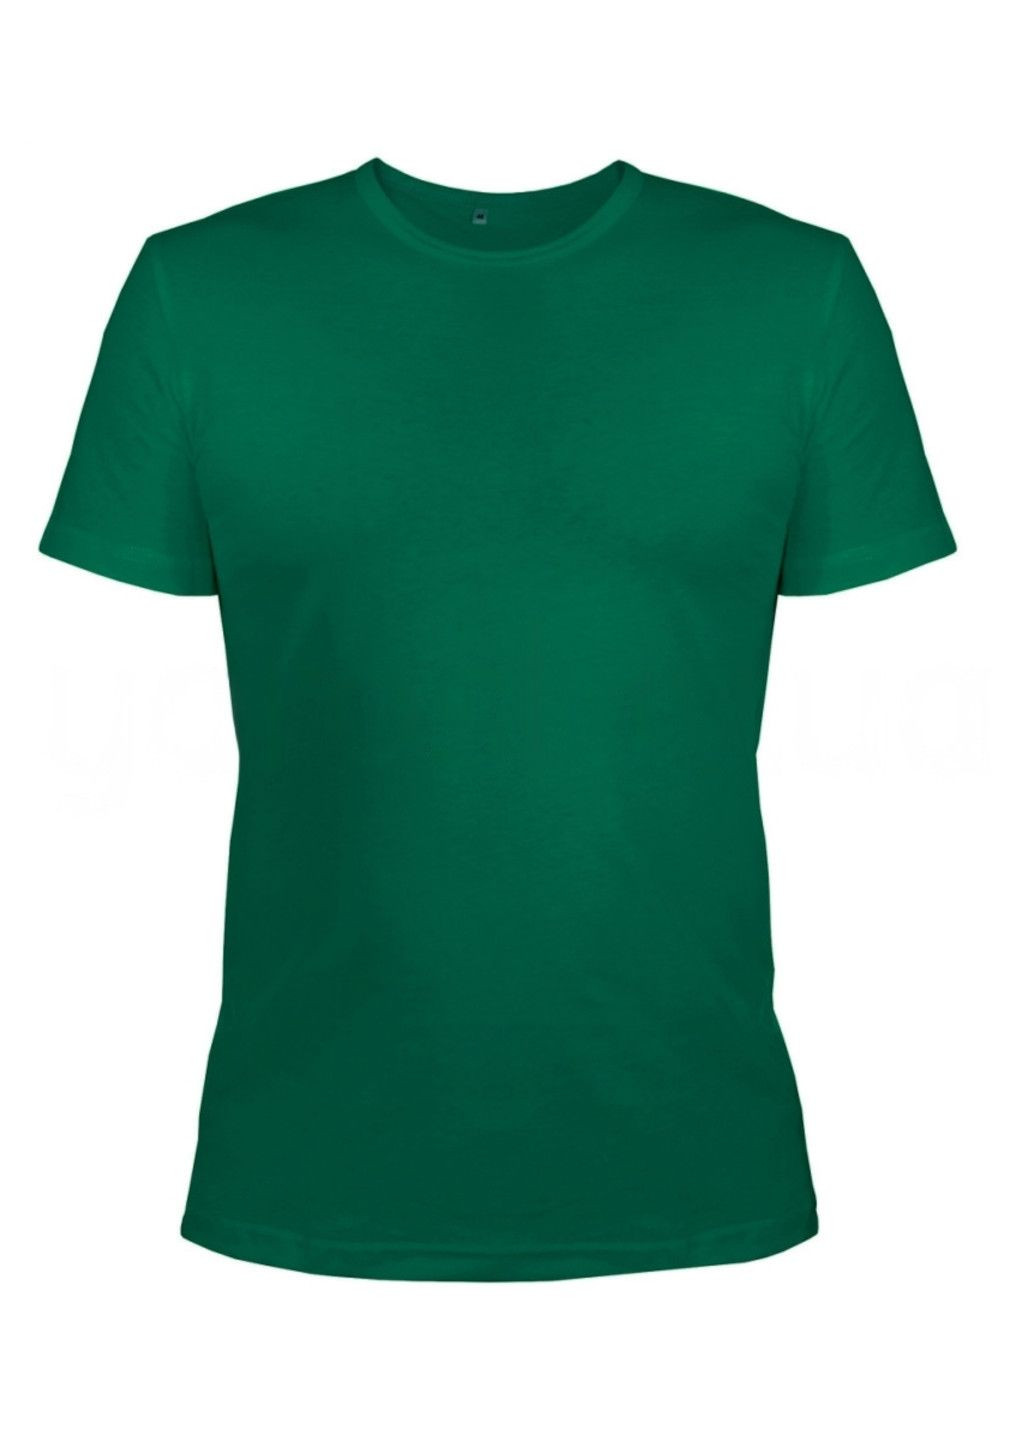 Зеленая футболка мужская м.45 с коротким рукавом Ярослав